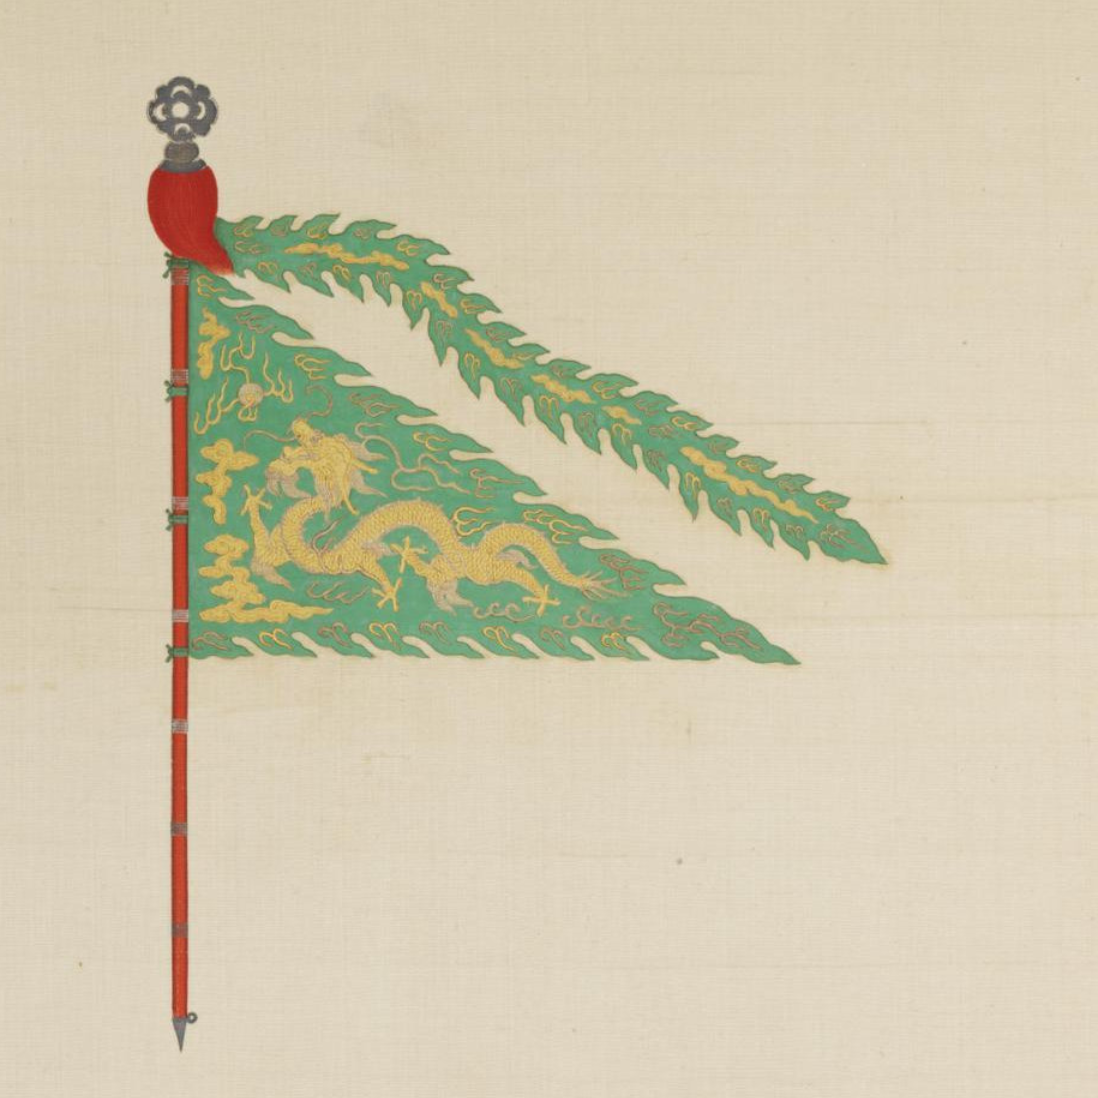 Green Standard Army flag